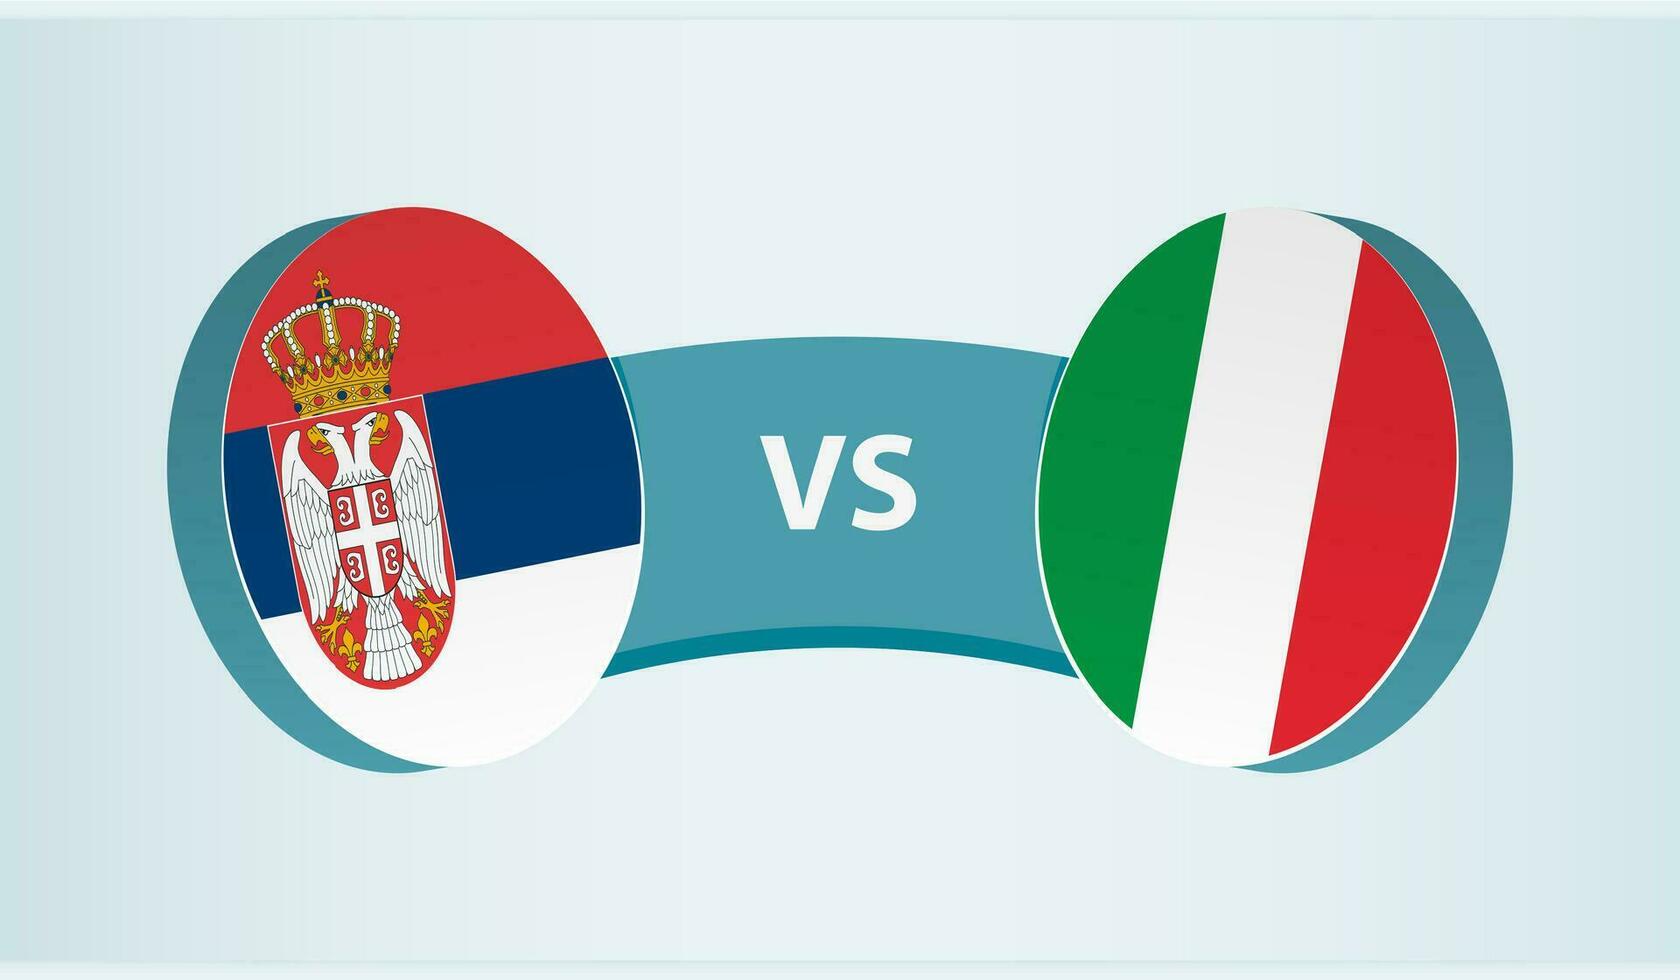 serbia mot Italien, team sporter konkurrens begrepp. vektor